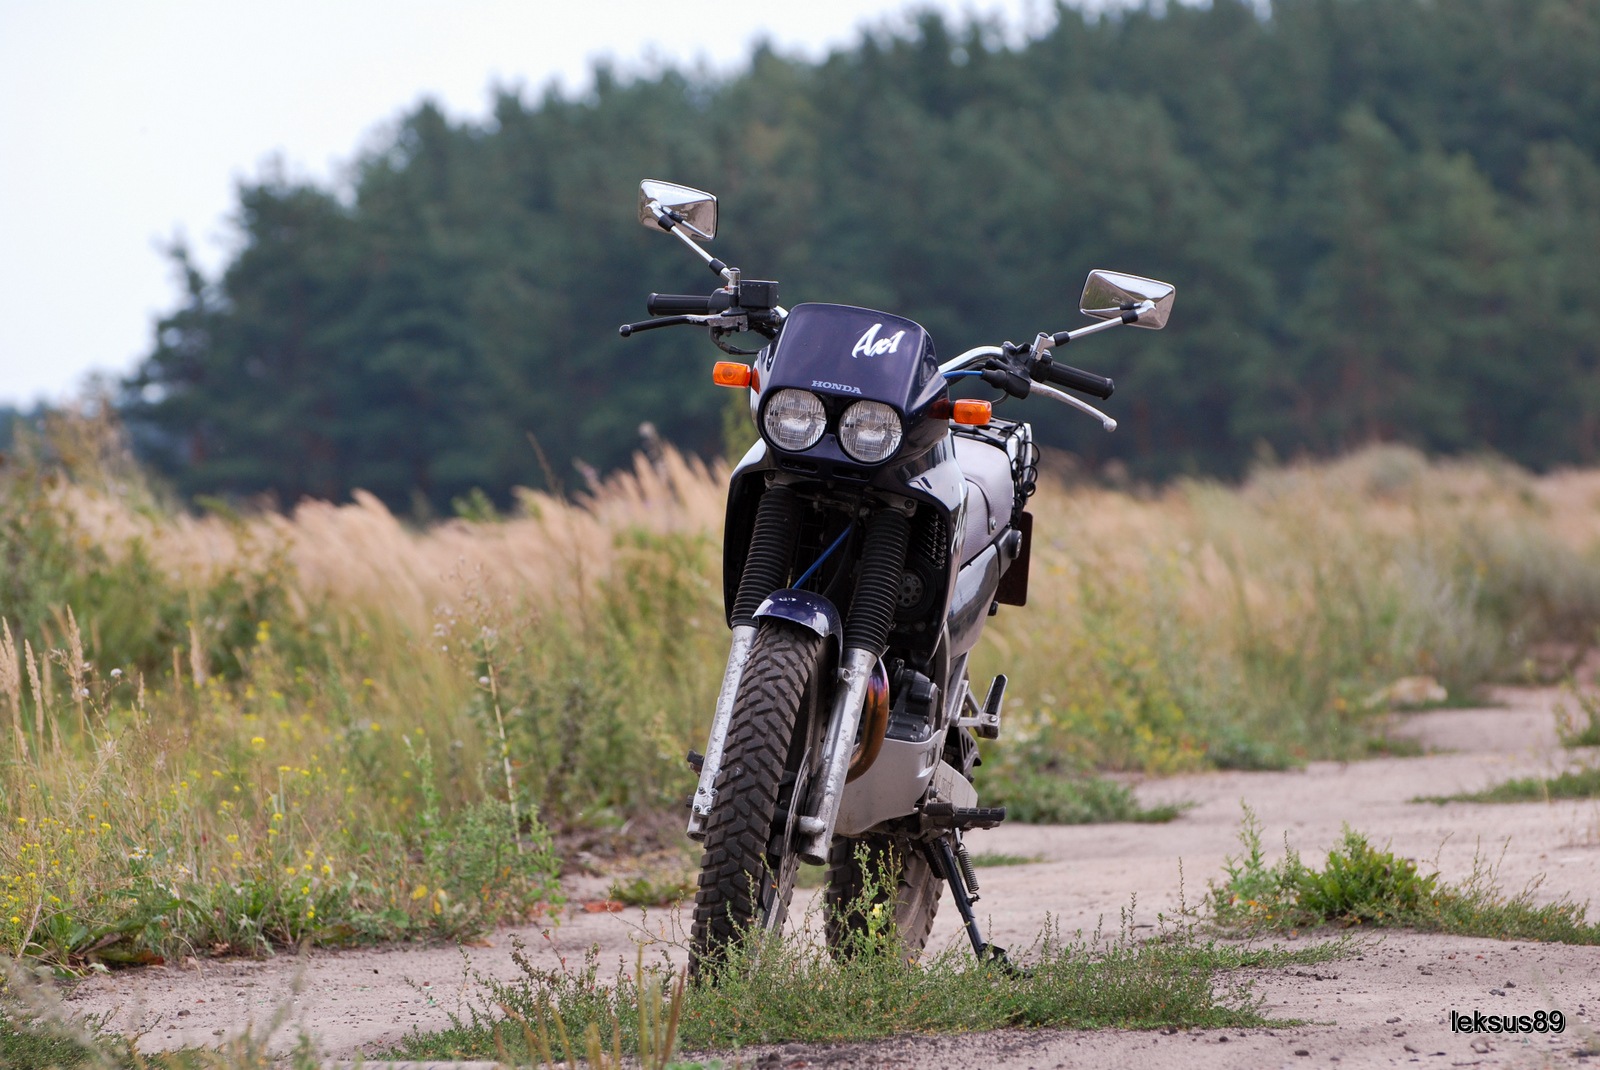 Характеристика особенностей мотоцикла honda ax 1 - motonoob.ru